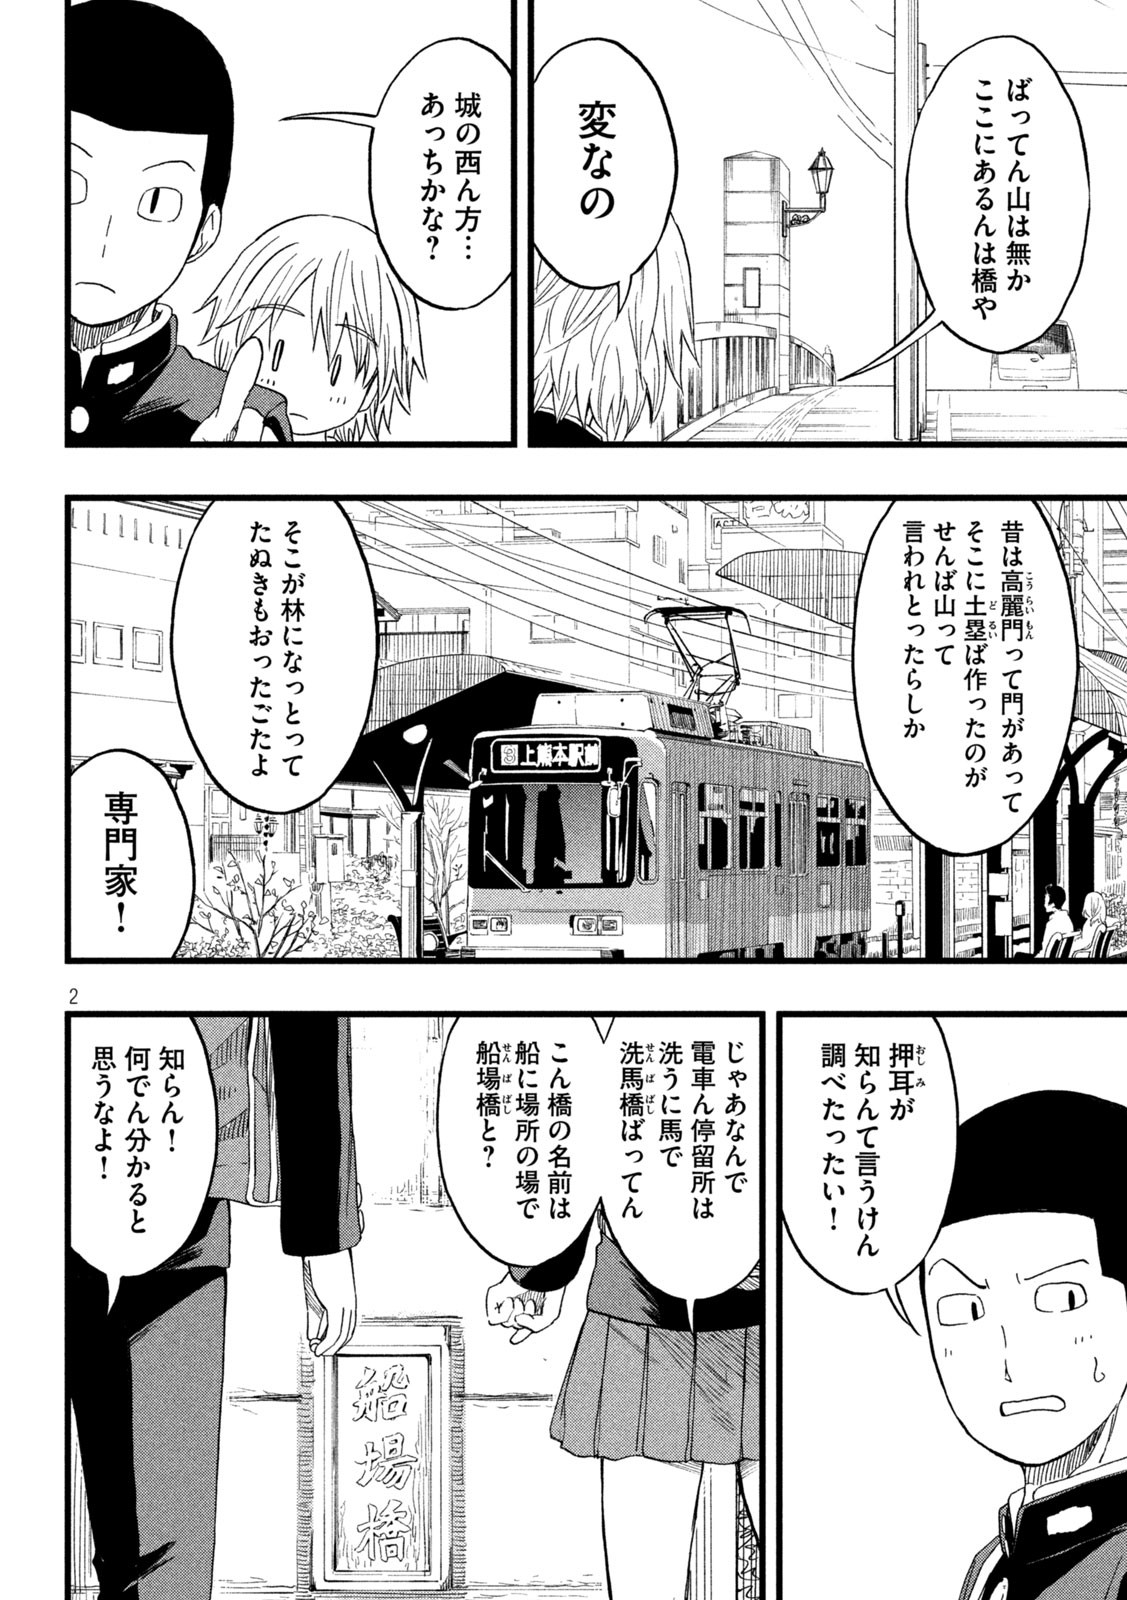 Koharu haru! - Chapter 73 - Page 2